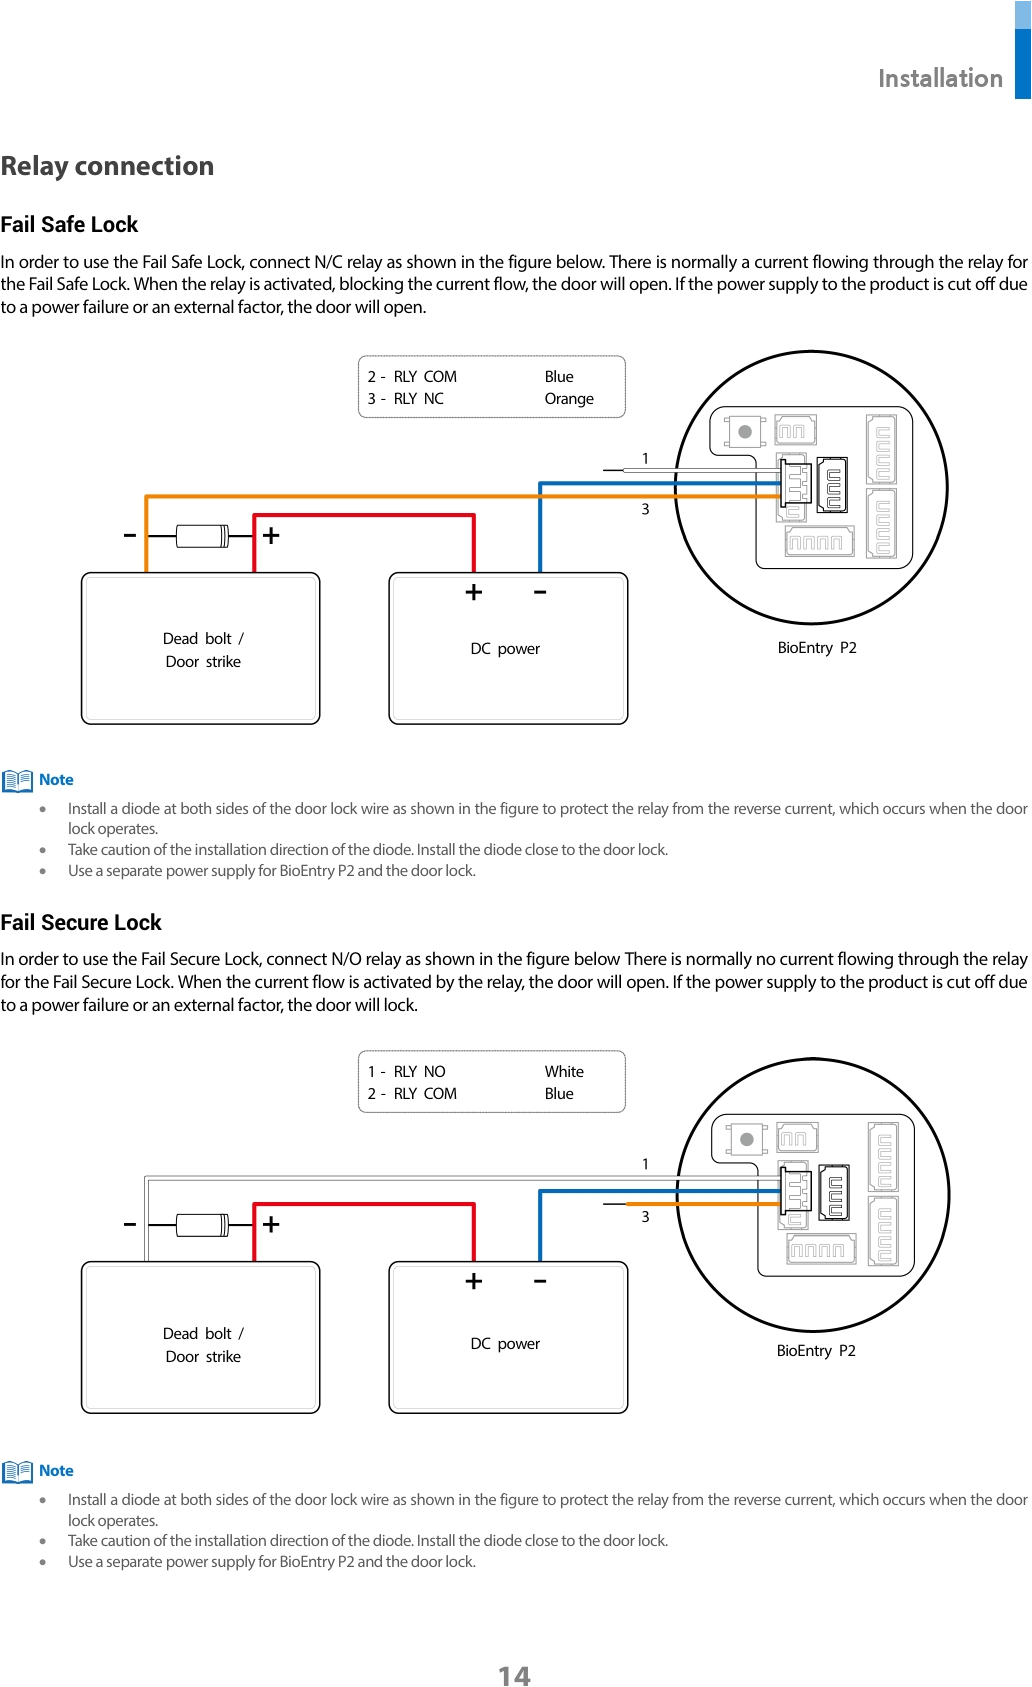 fire alarm flow switch wiring diagram free wiring diagram